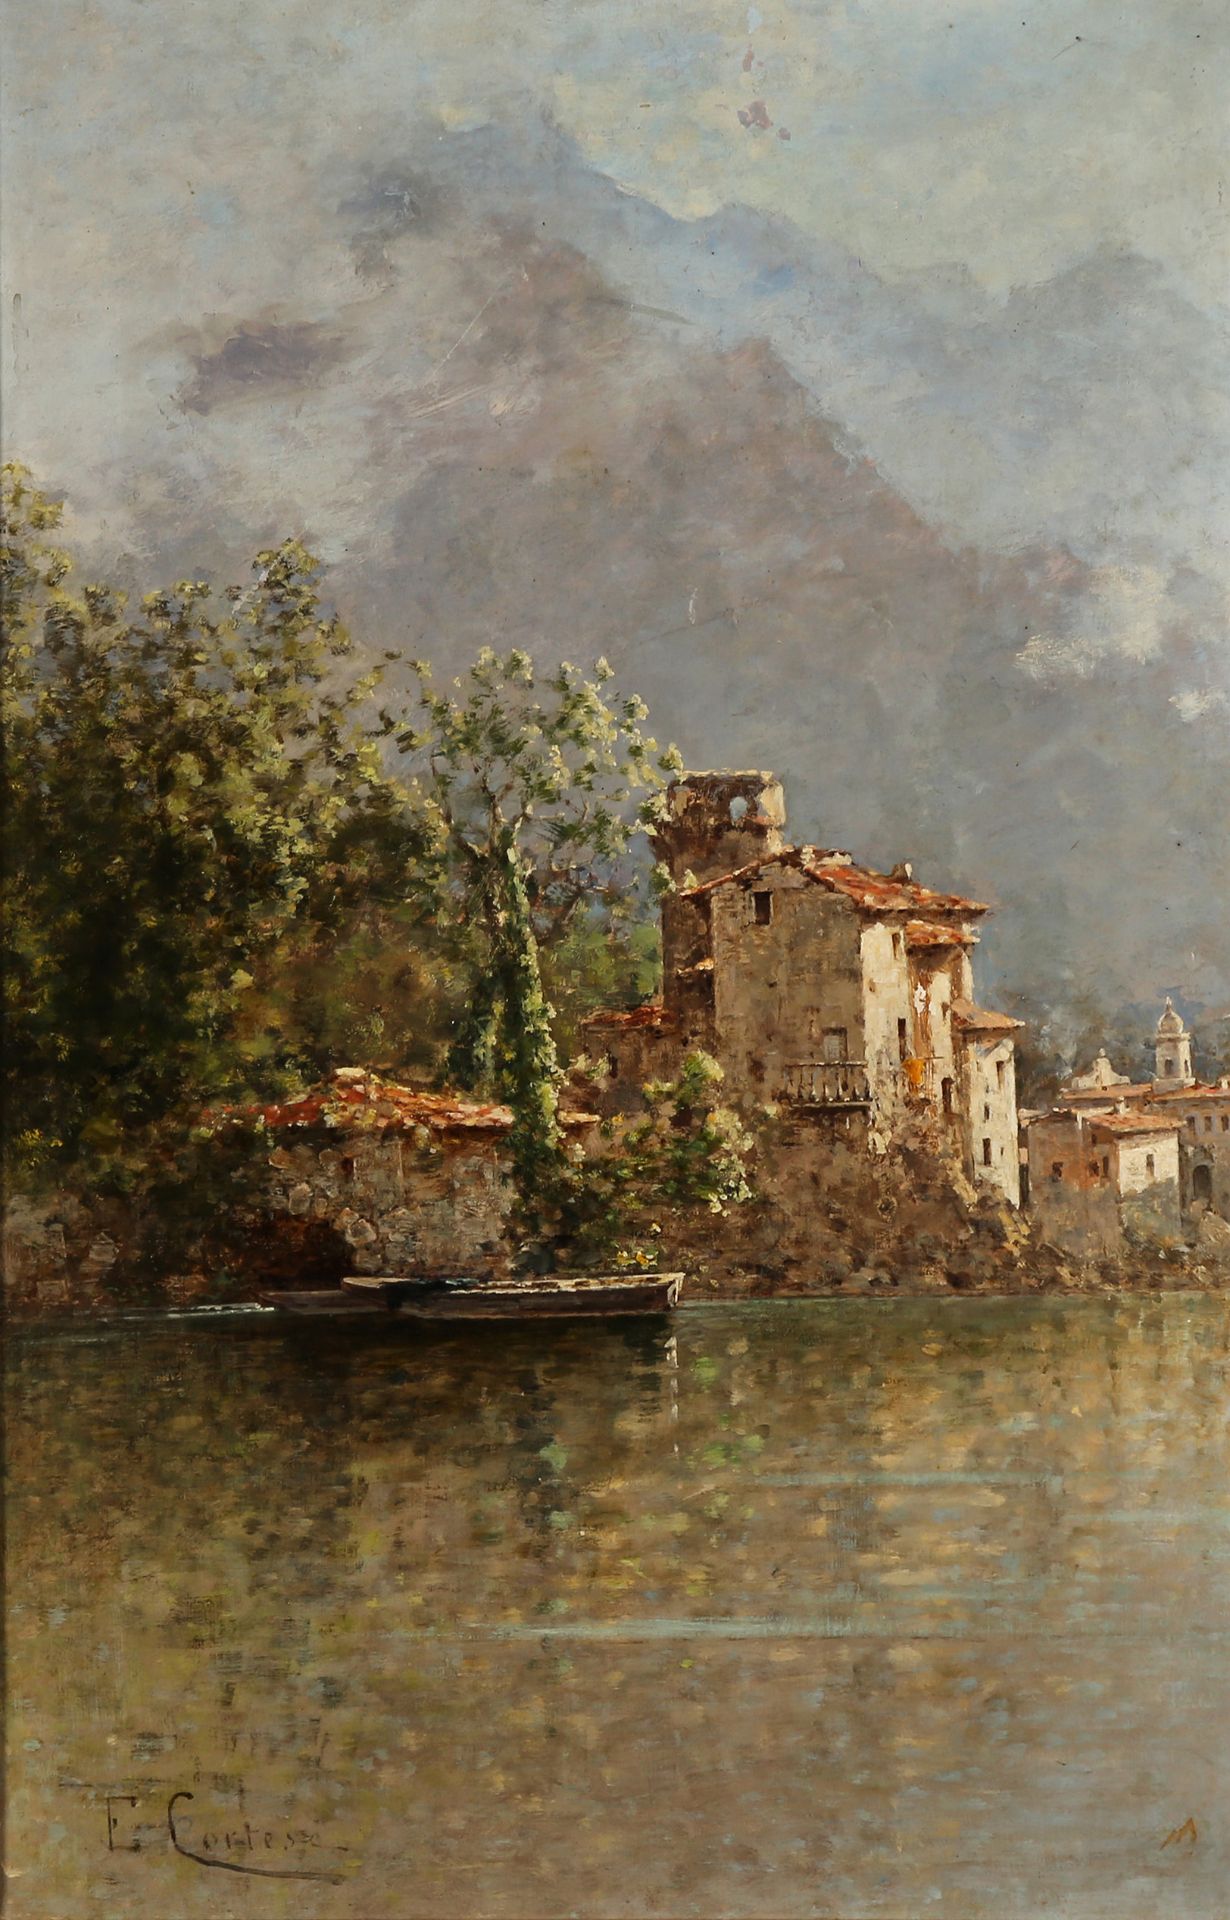 Eduardo Cortese. 1856 Neapel - 1918 Buenos Aires. Umberto I. erwarb eines seiner Werke, was ihn berü